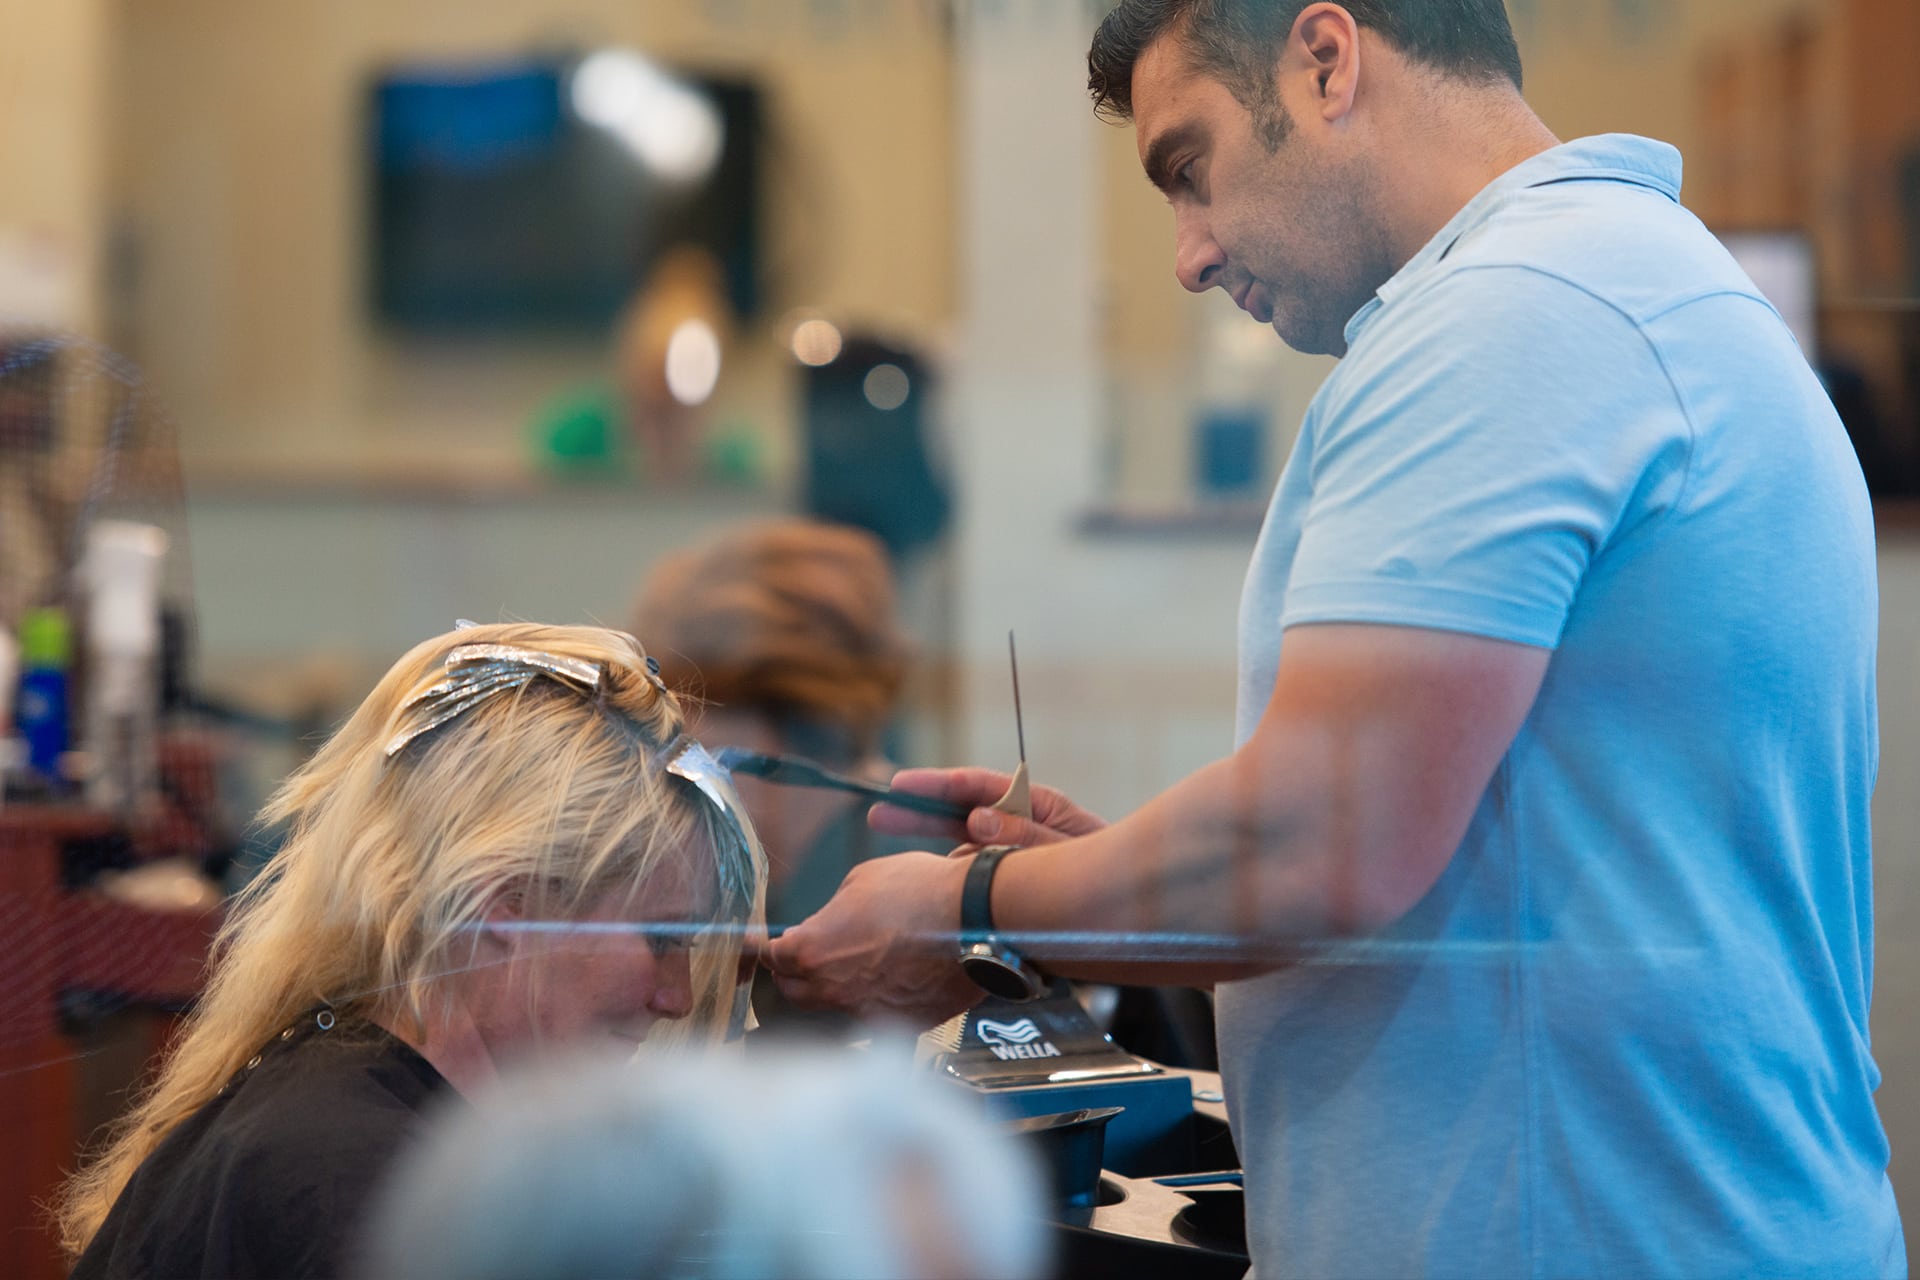 Man dyes woman's hair blonde in salon